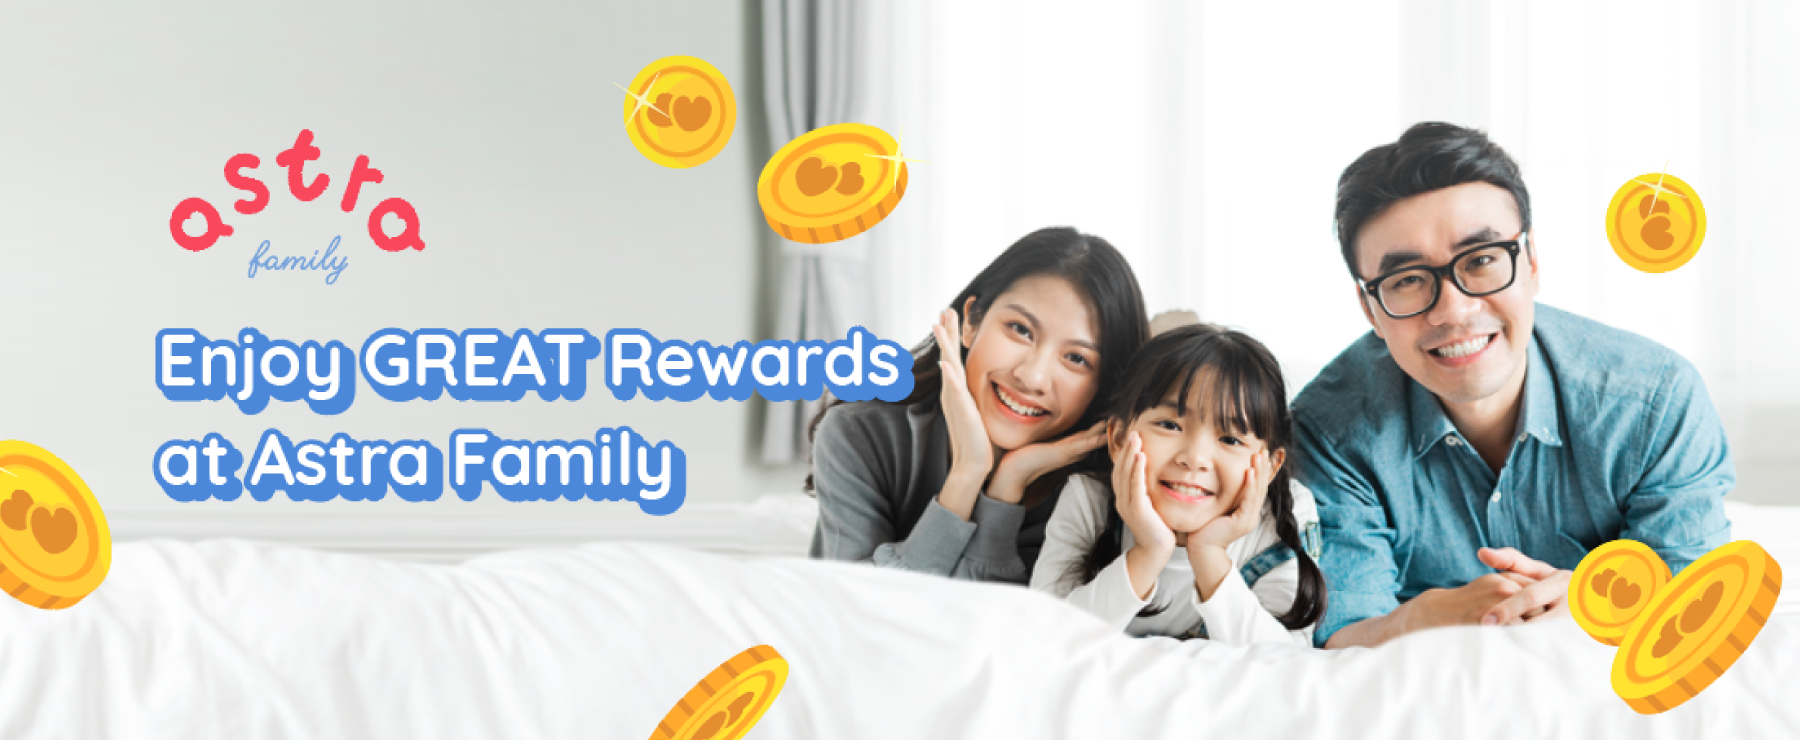 Astra Family Osta enjoy great rewards on osta family.